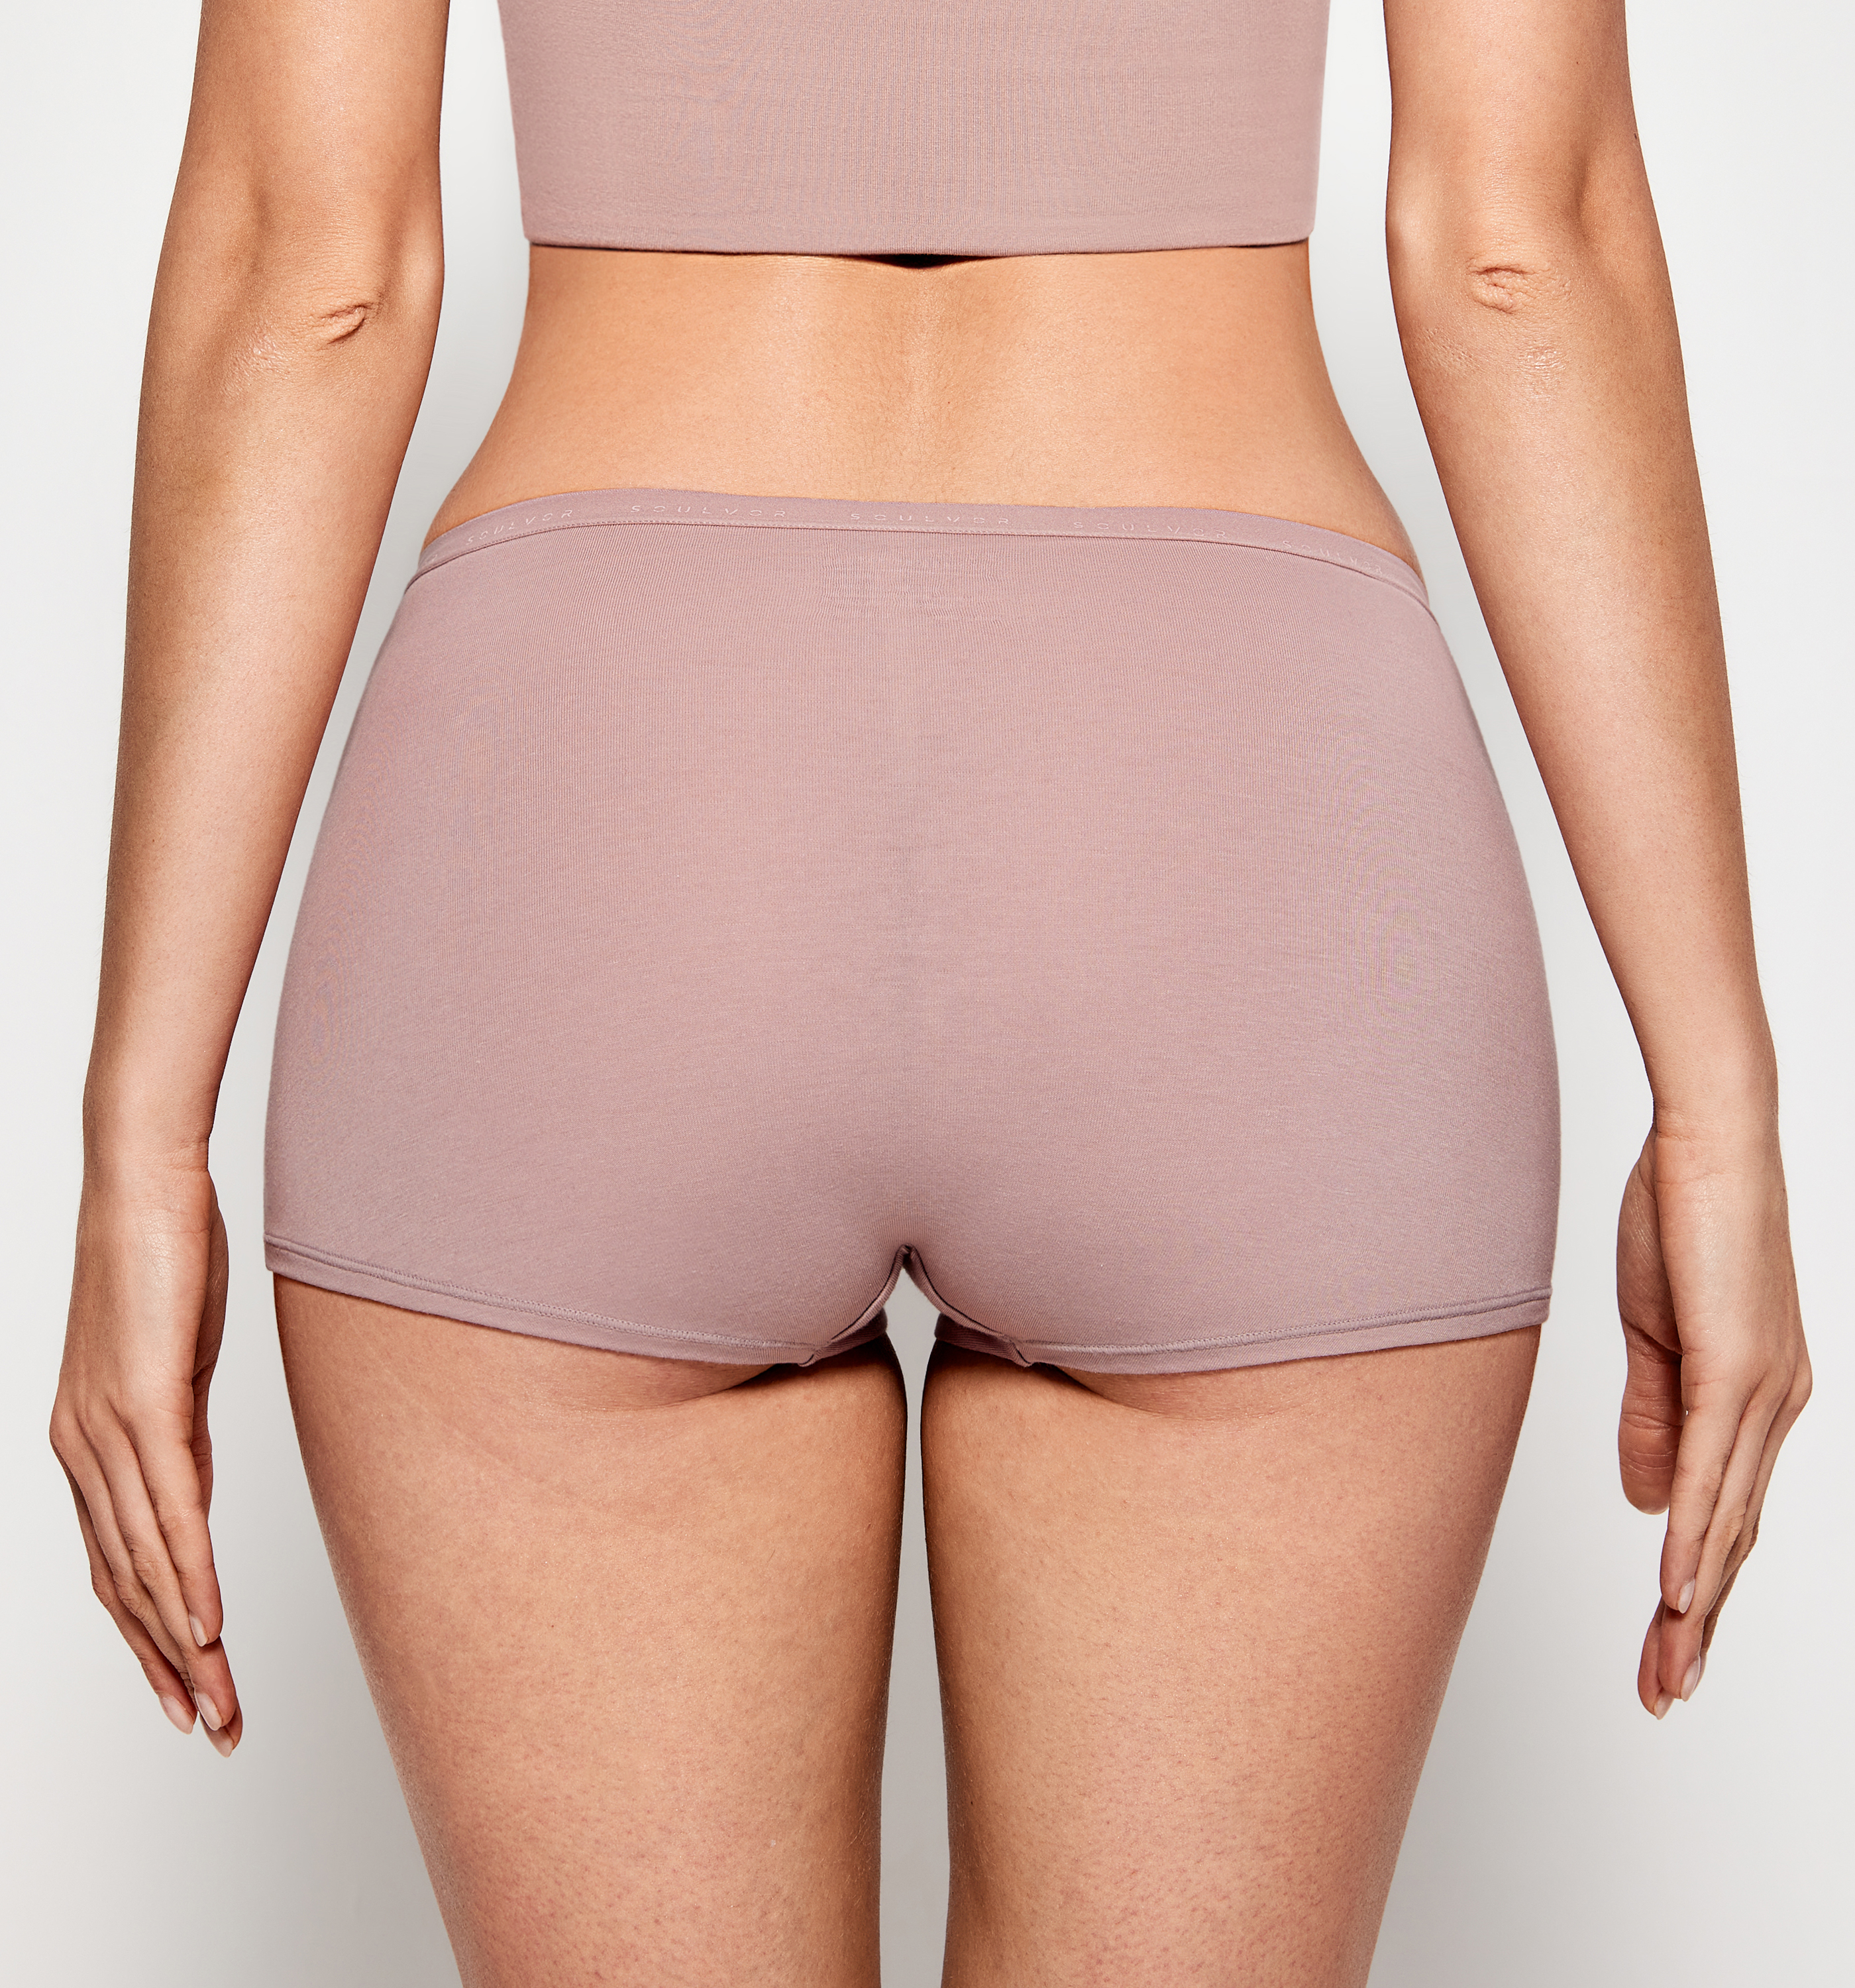 4 Pack Natrelax Women's Underwear Cotton Panties Low Rise Modal